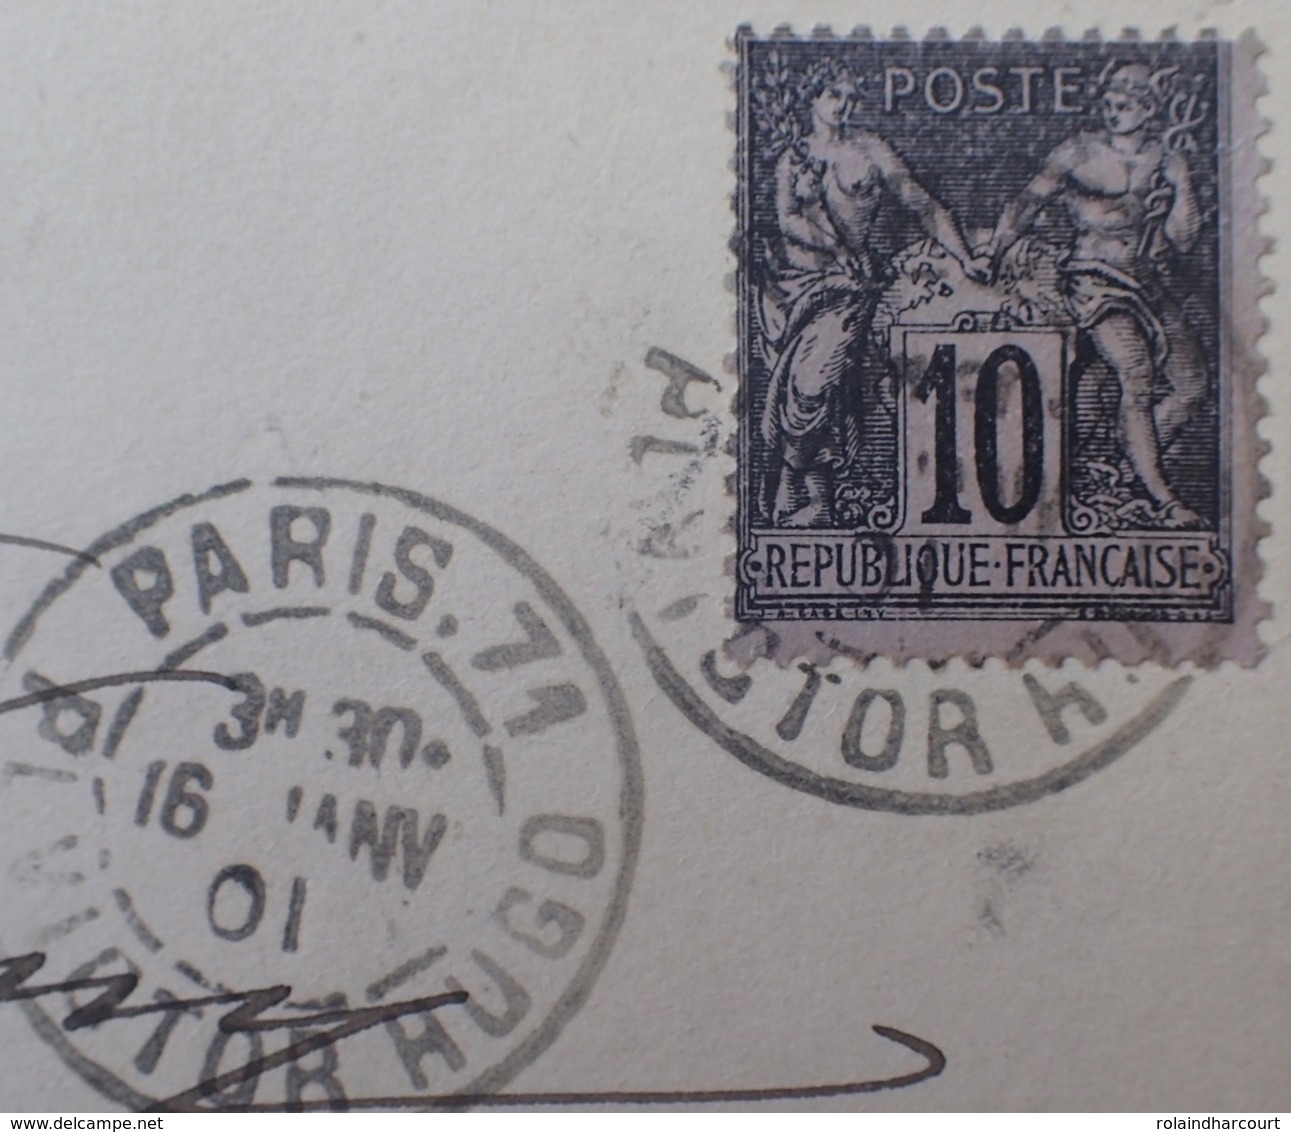 DF40266/400 - SAGE III N°103 Sur CP - CàD : PARIS 71 - Place Victor Hugo - 16 JANVIER 1901 à OULLINS (Rhône) - 1898-1900 Sage (Type III)